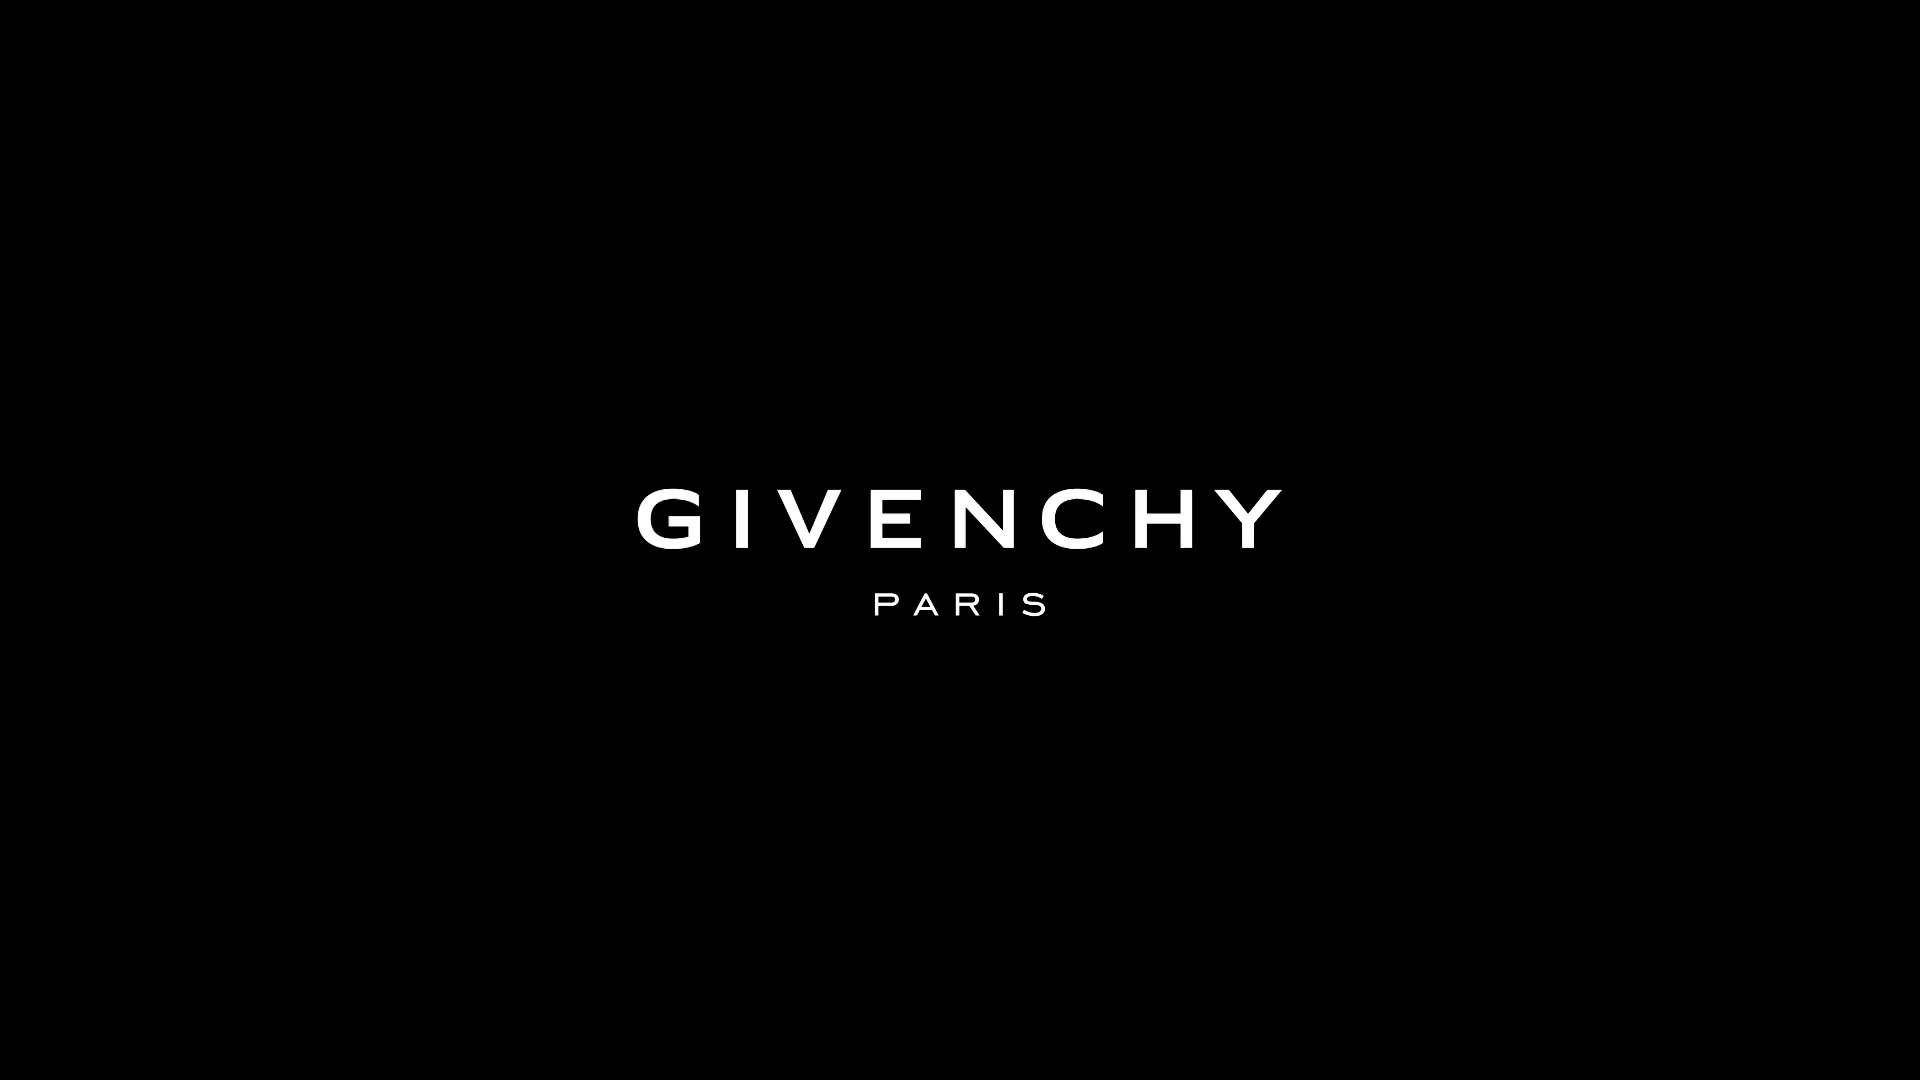 Givenchy Paris Black Background Wallpaper